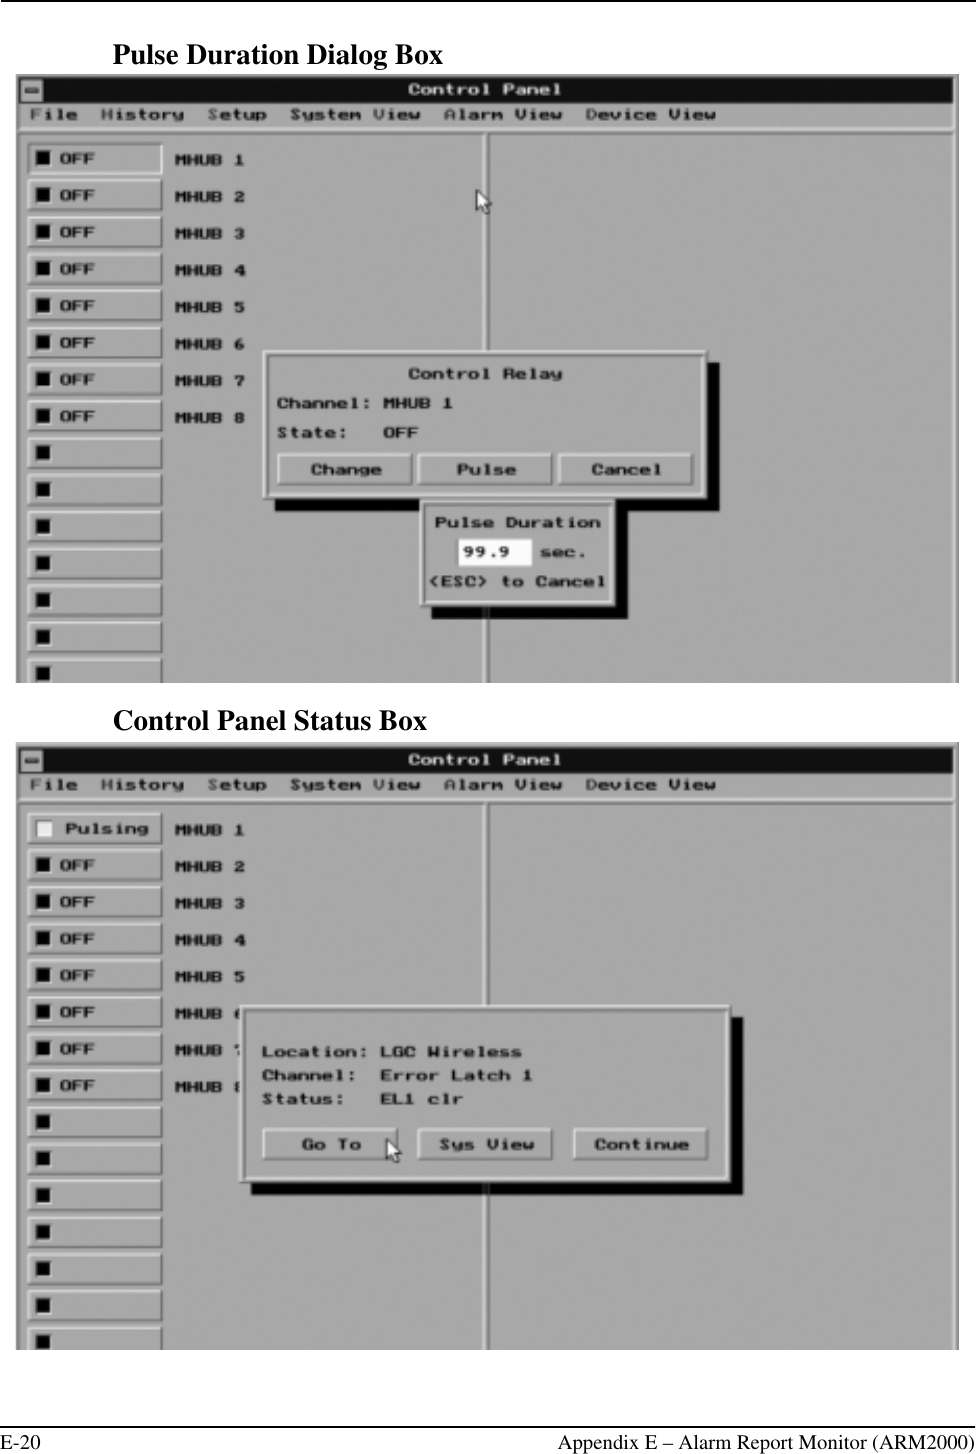 E-20 Appendix E – Alarm Report Monitor (ARM2000)Pulse Duration Dialog BoxControl Panel Status Box